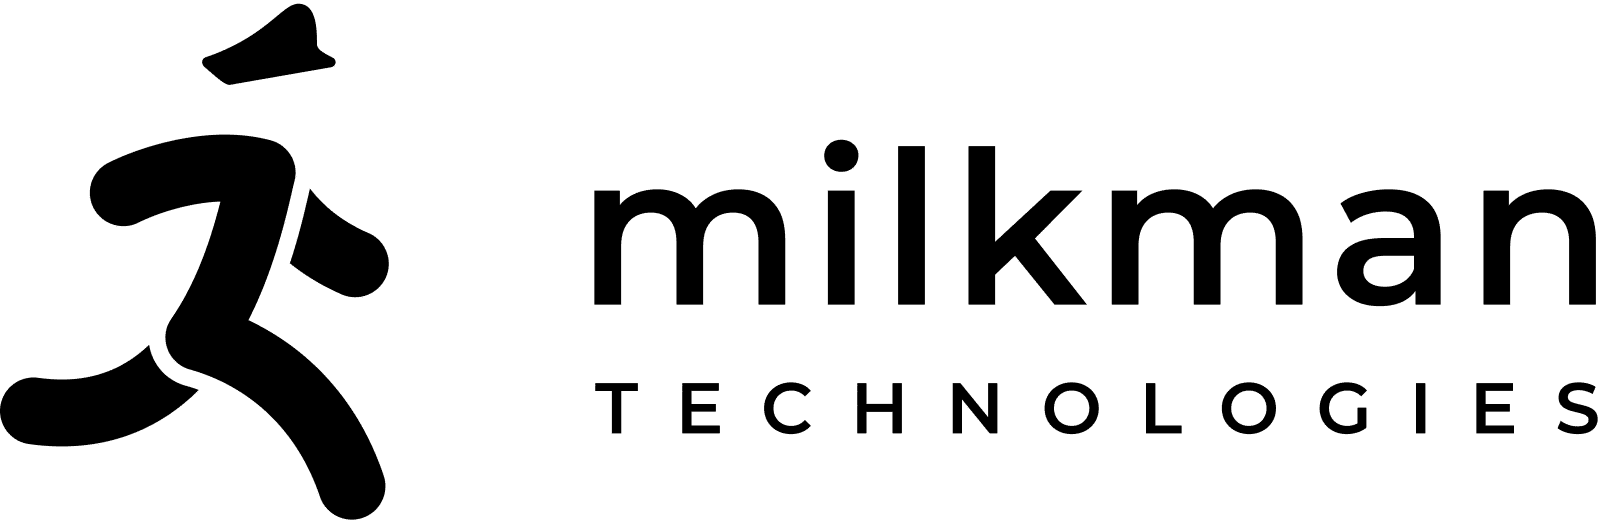 Milkman Technologies Logo